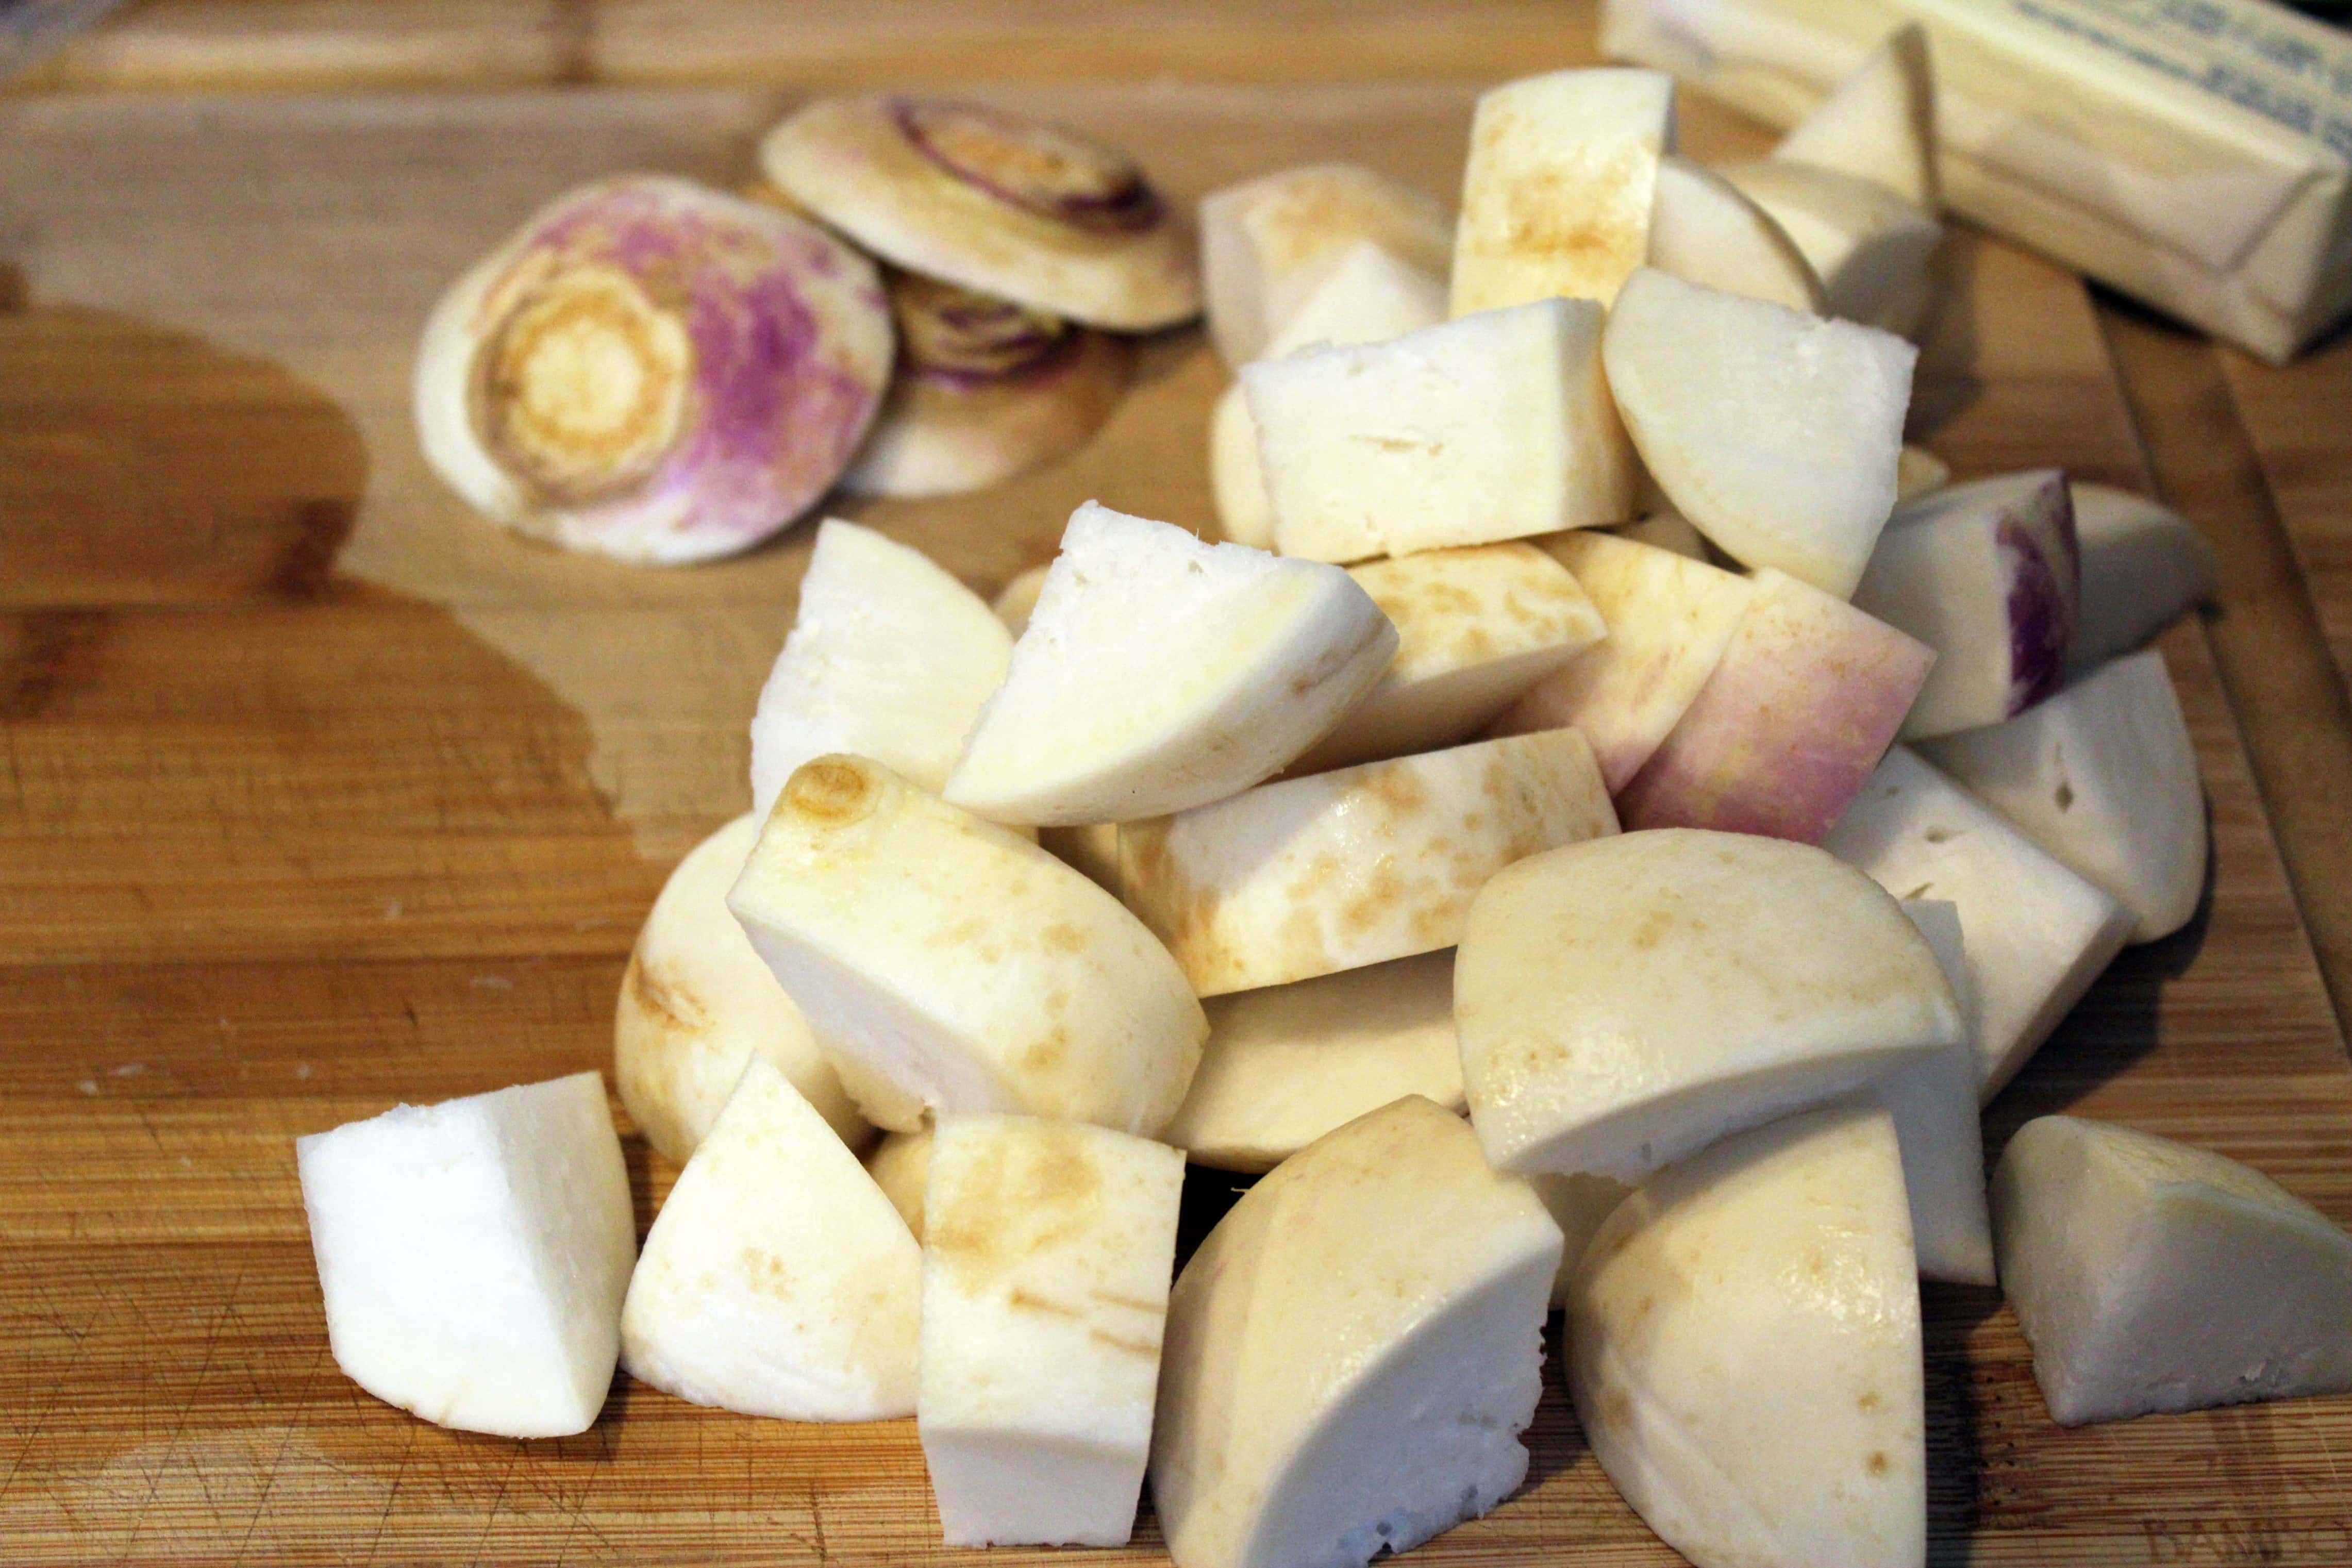 Cut turnips into chunks